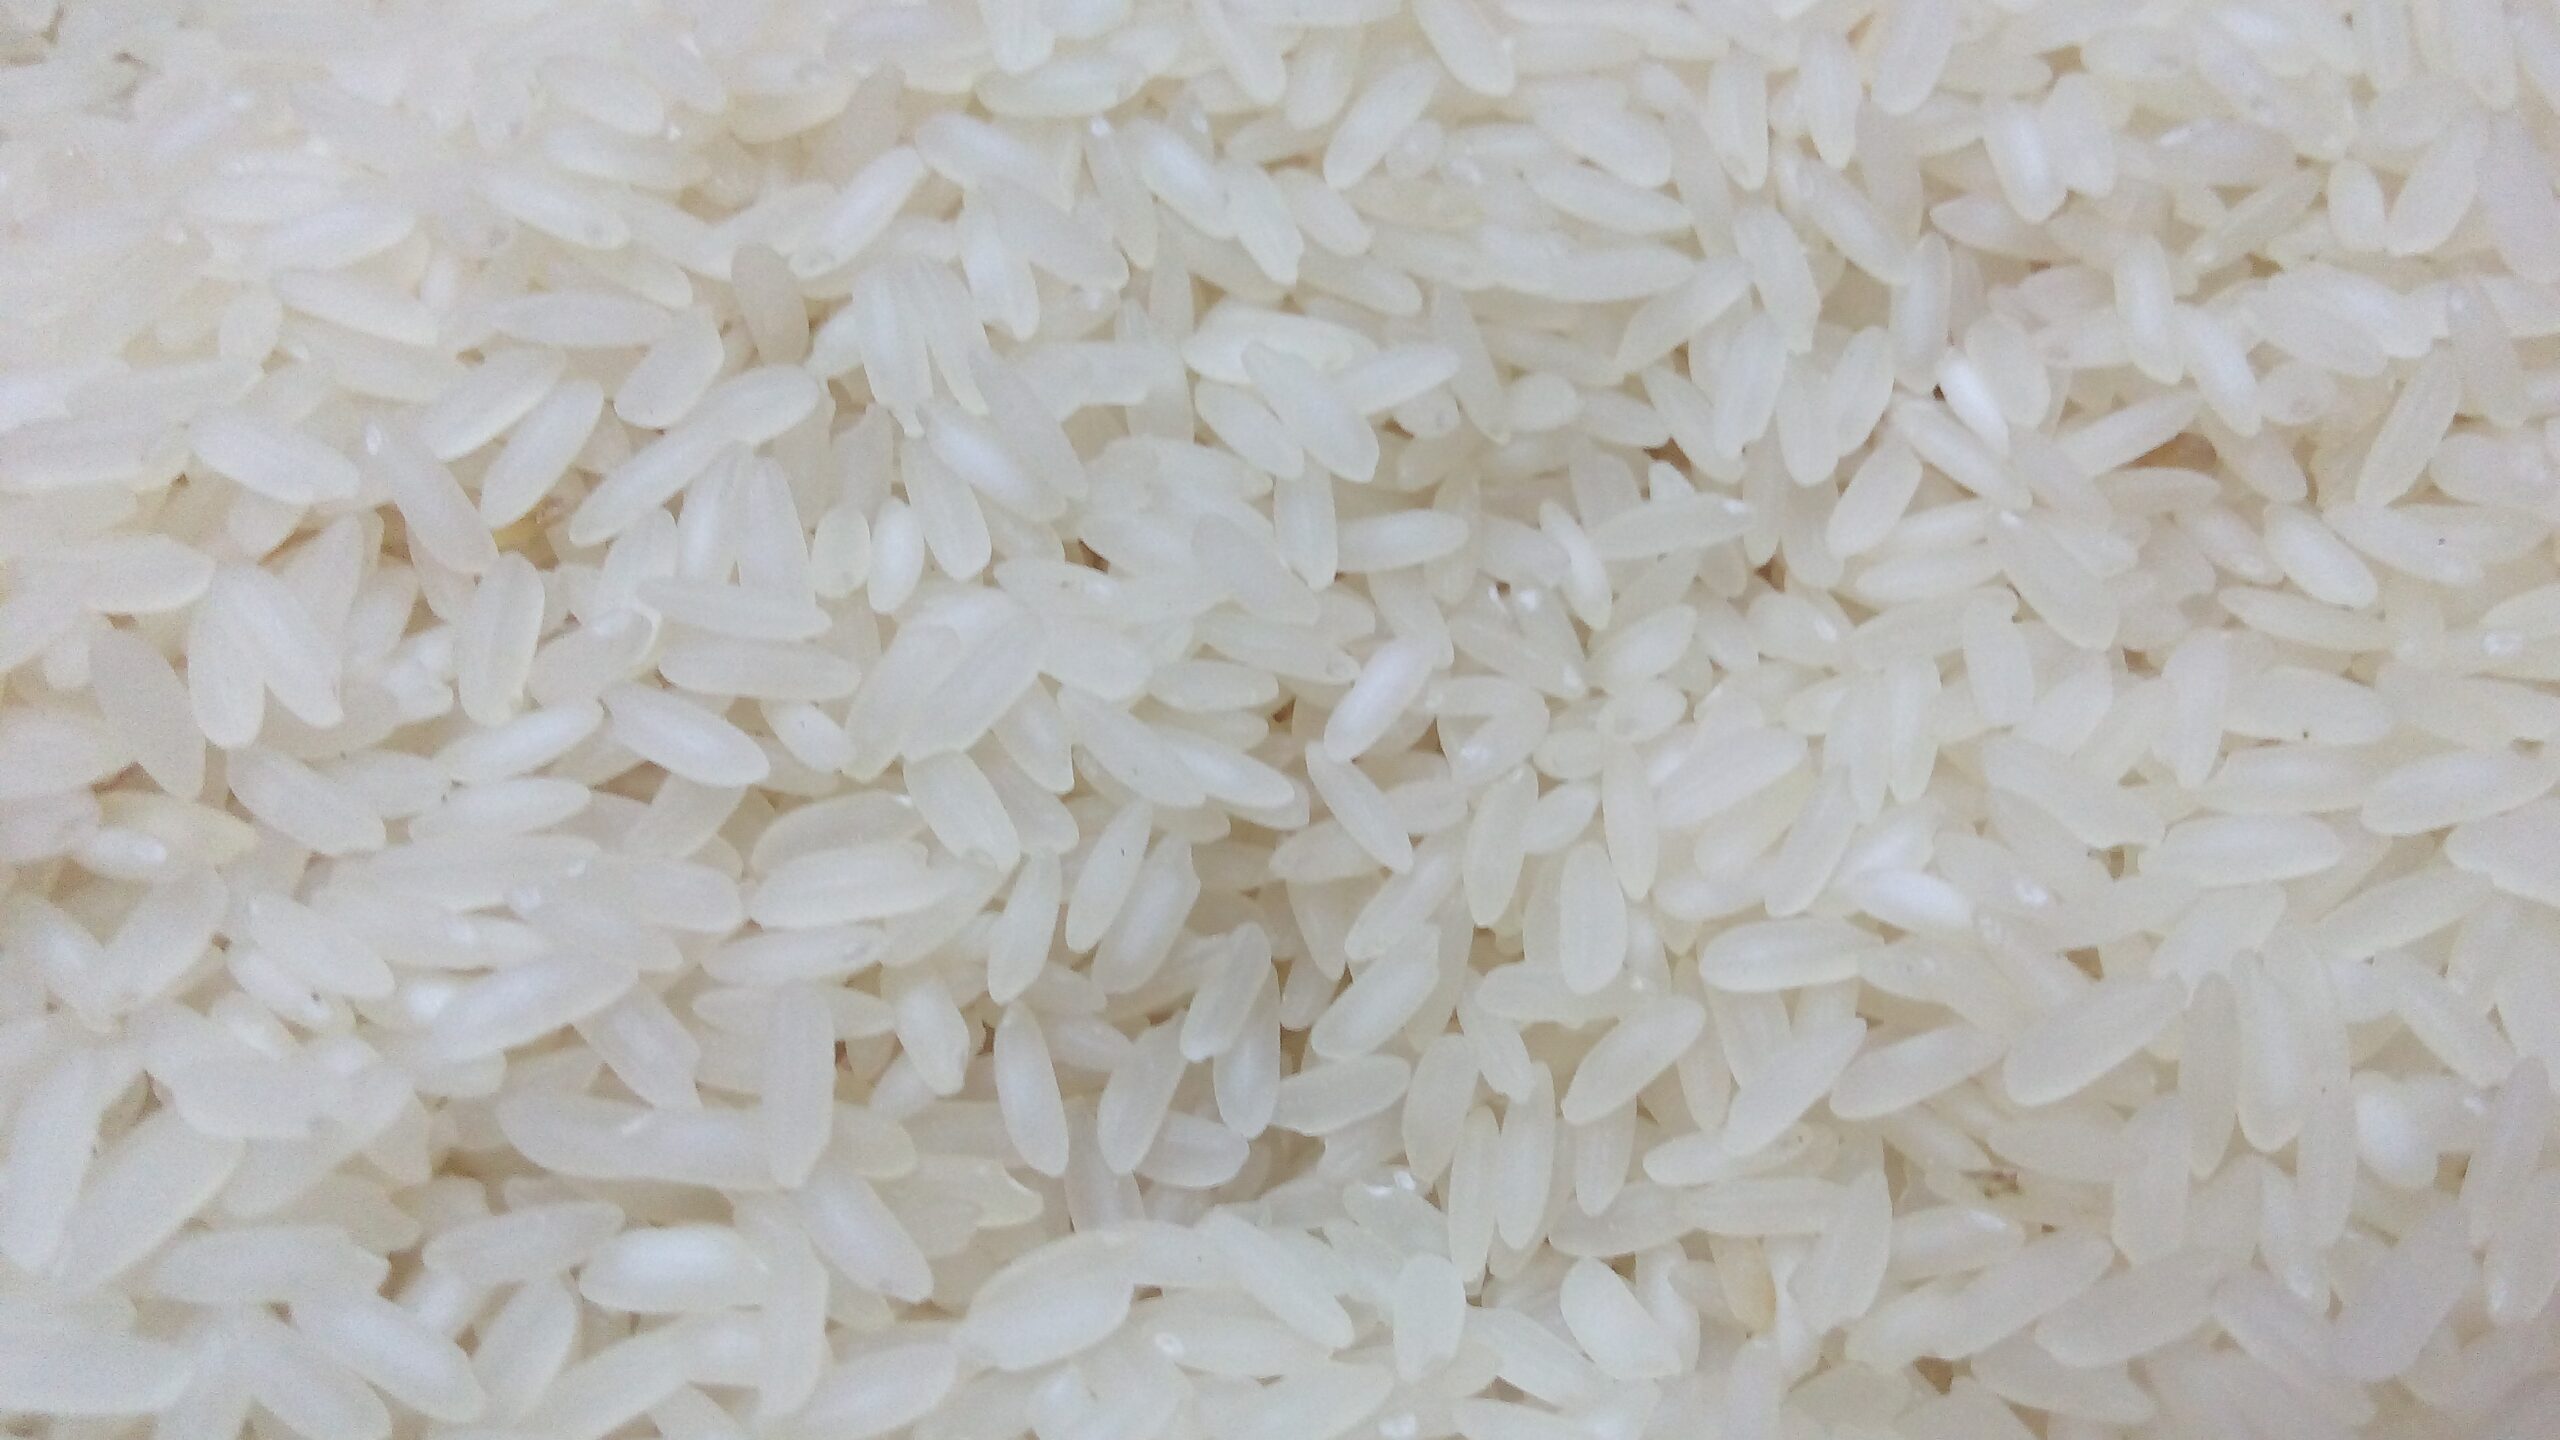 Leftover rice